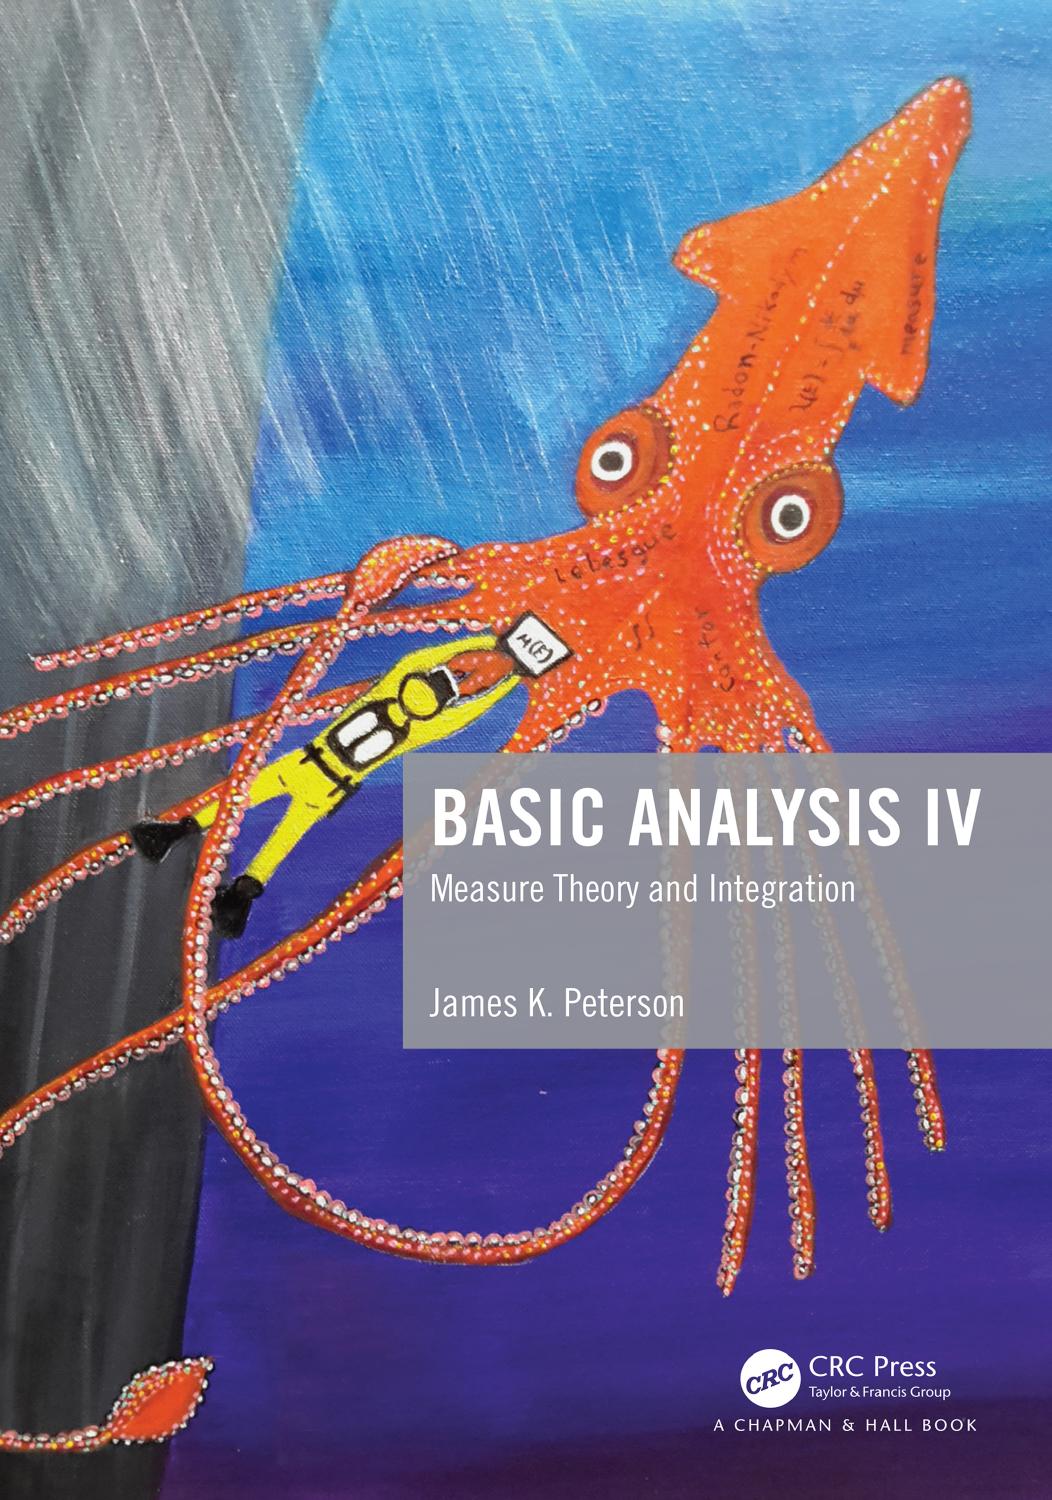 Basic Analysis IV: Measure Theory and Integration